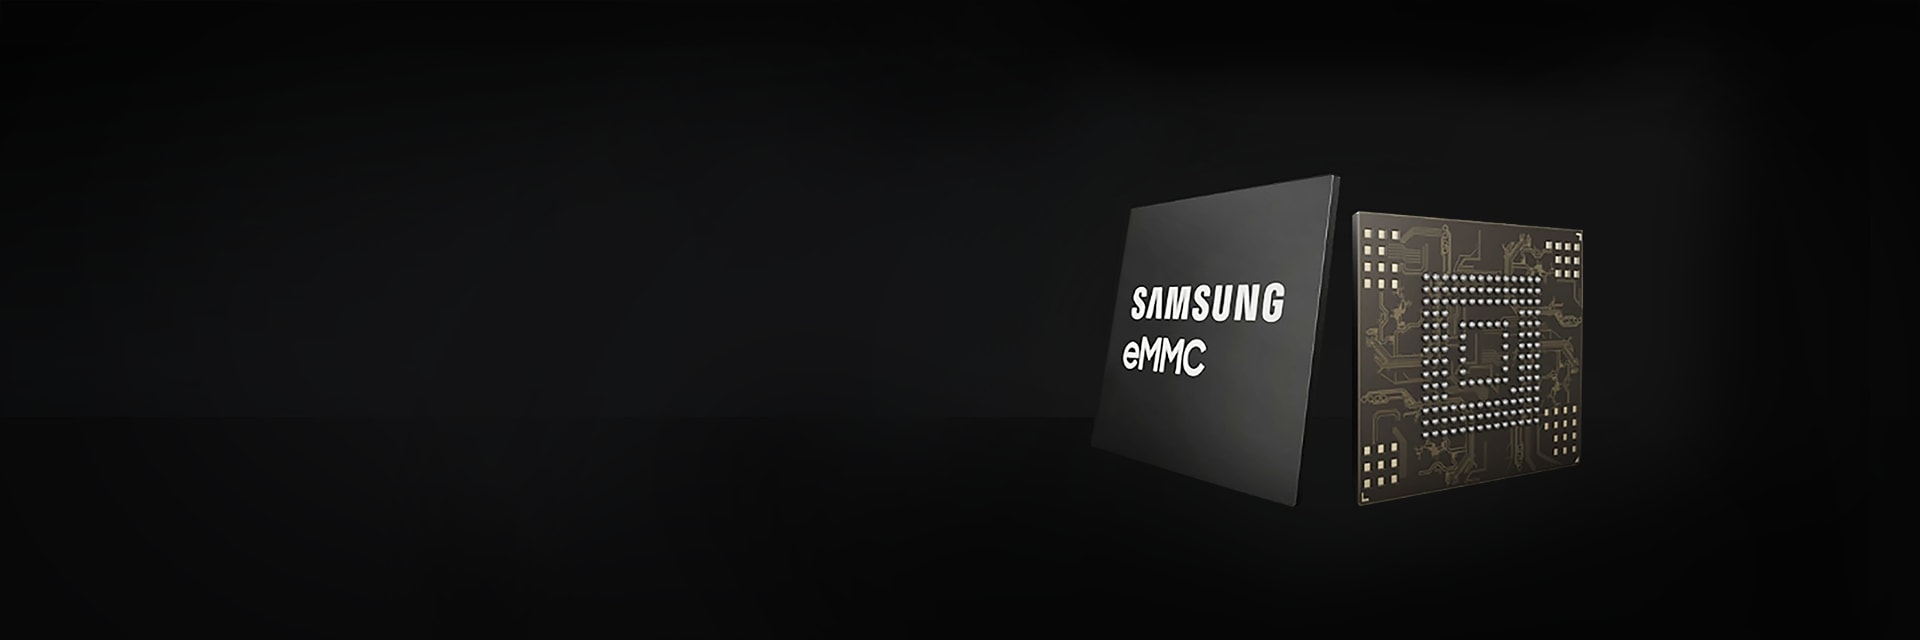 Samsung Semiconductor eSTORAGE eMMC, Design the Best Mobile Performance